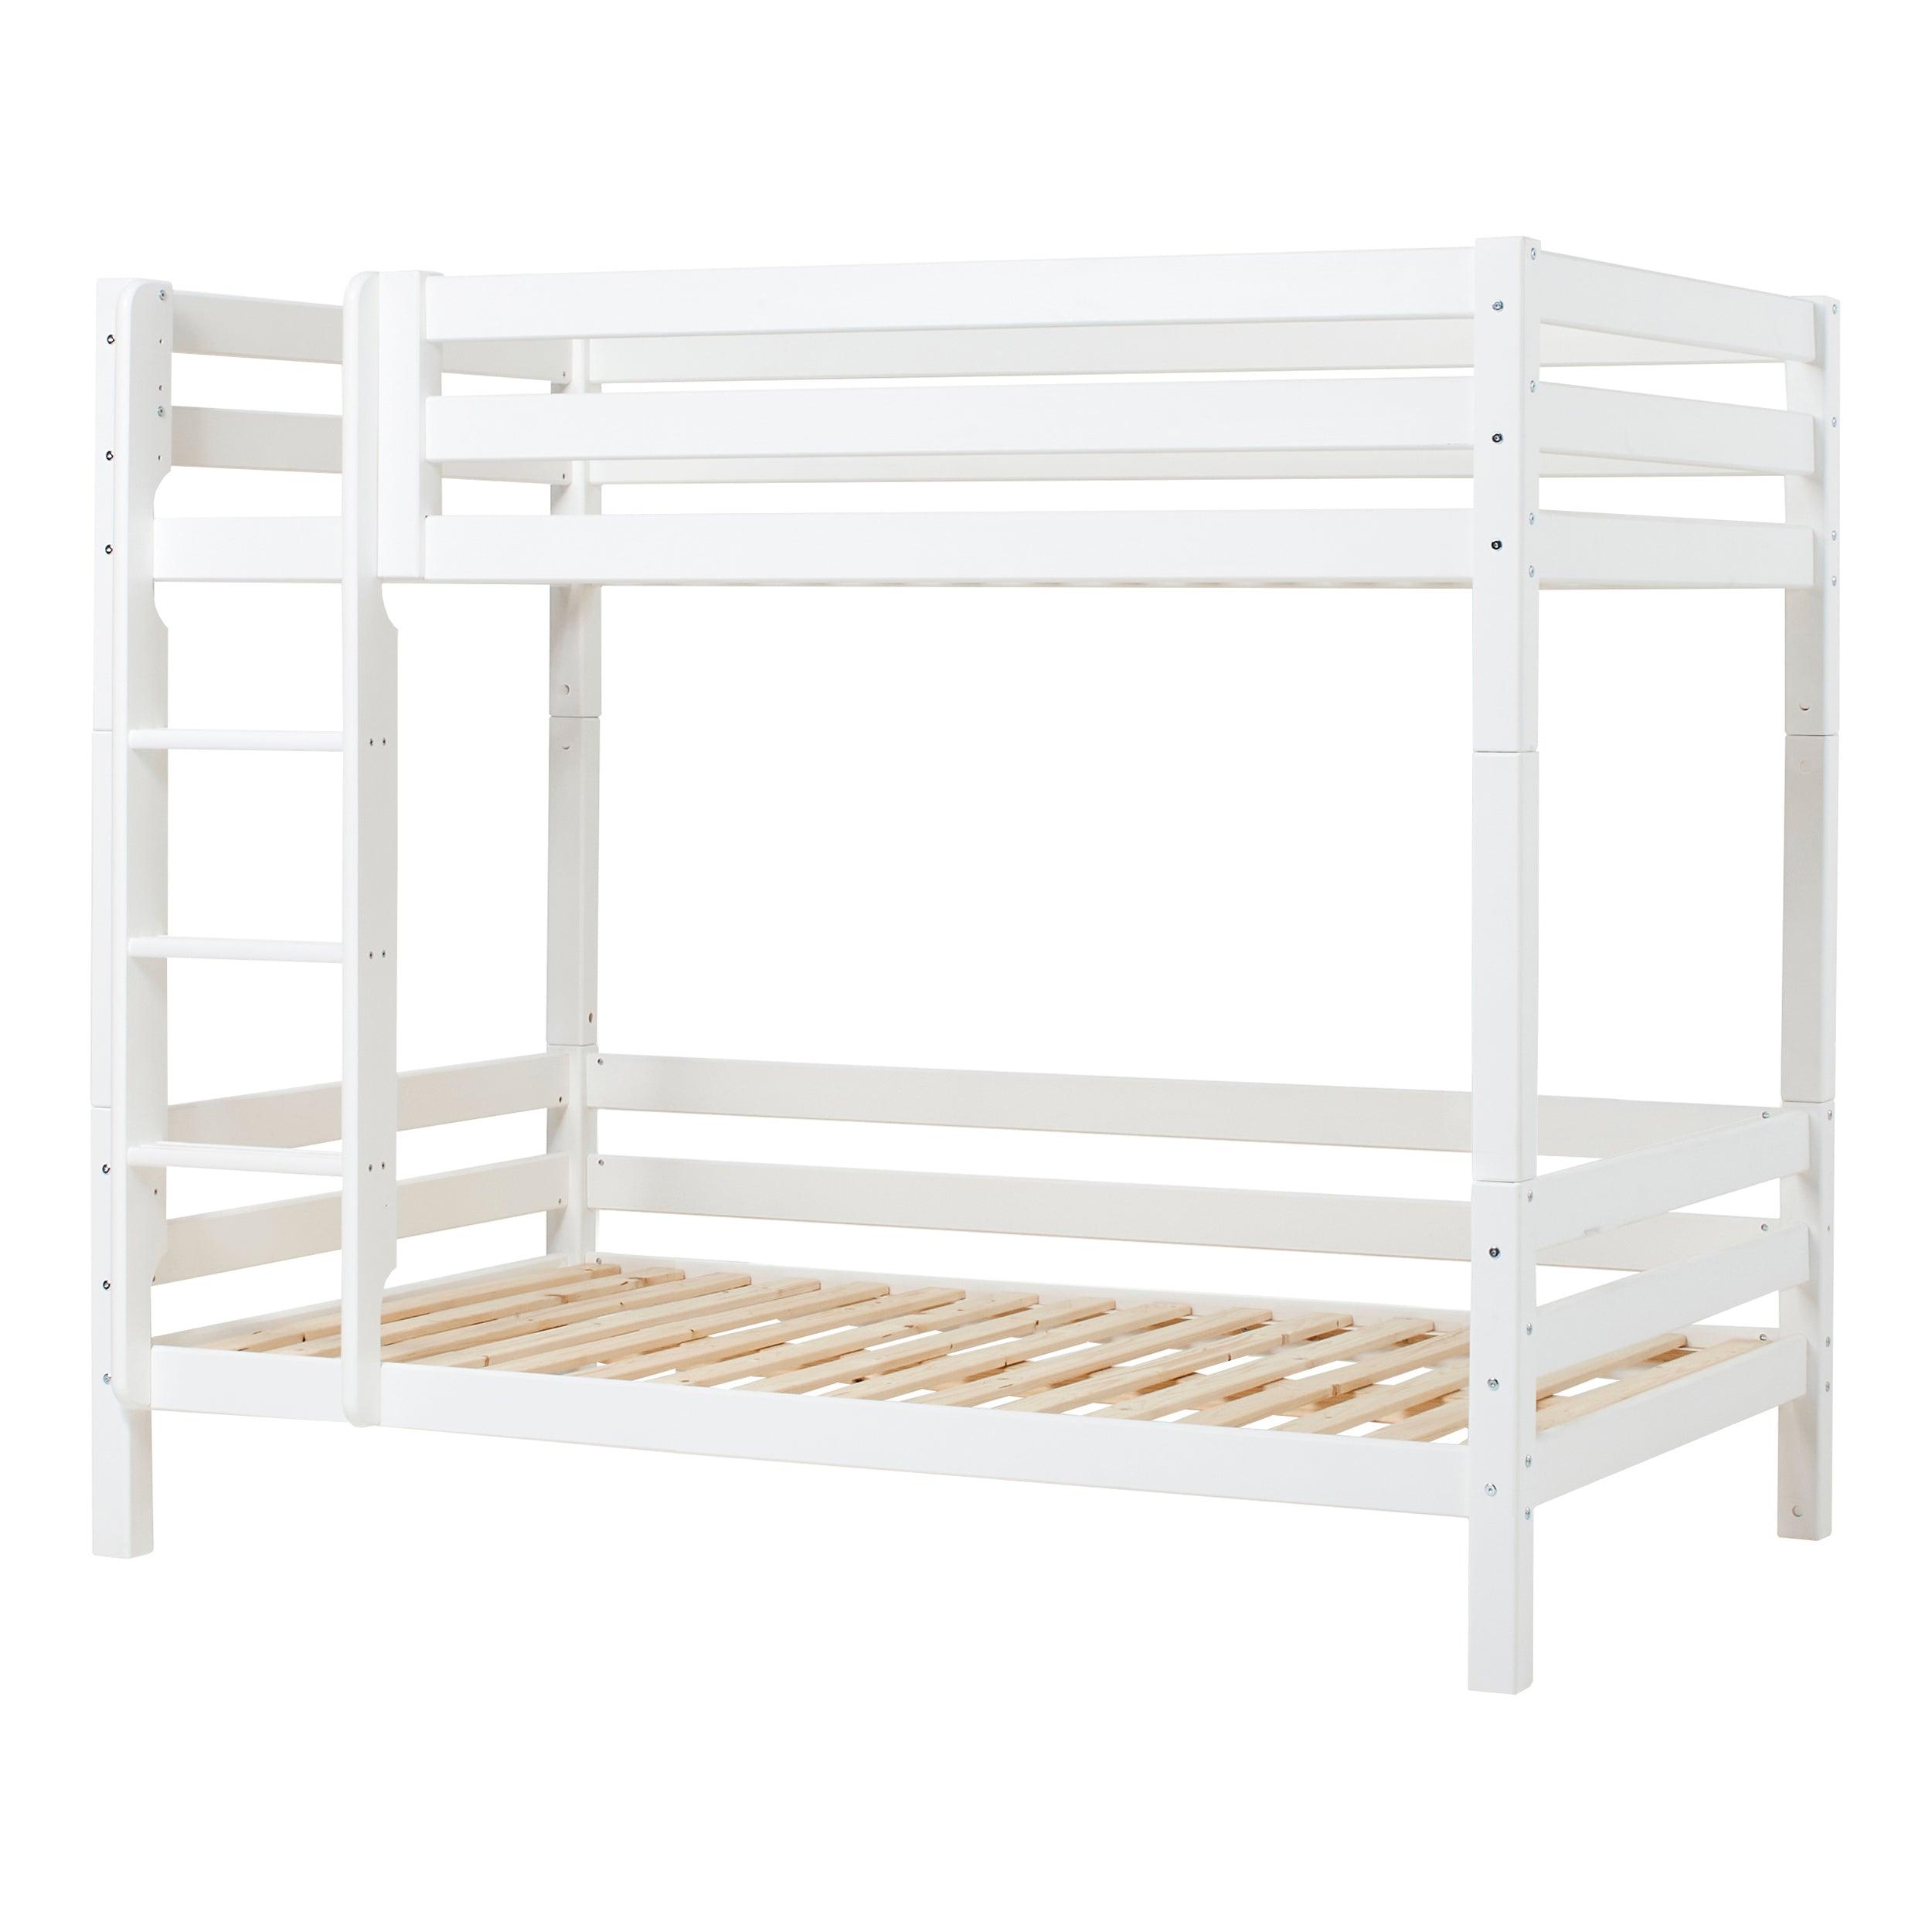 Hoppekids ECO Luxury medium blocks for bunk bed